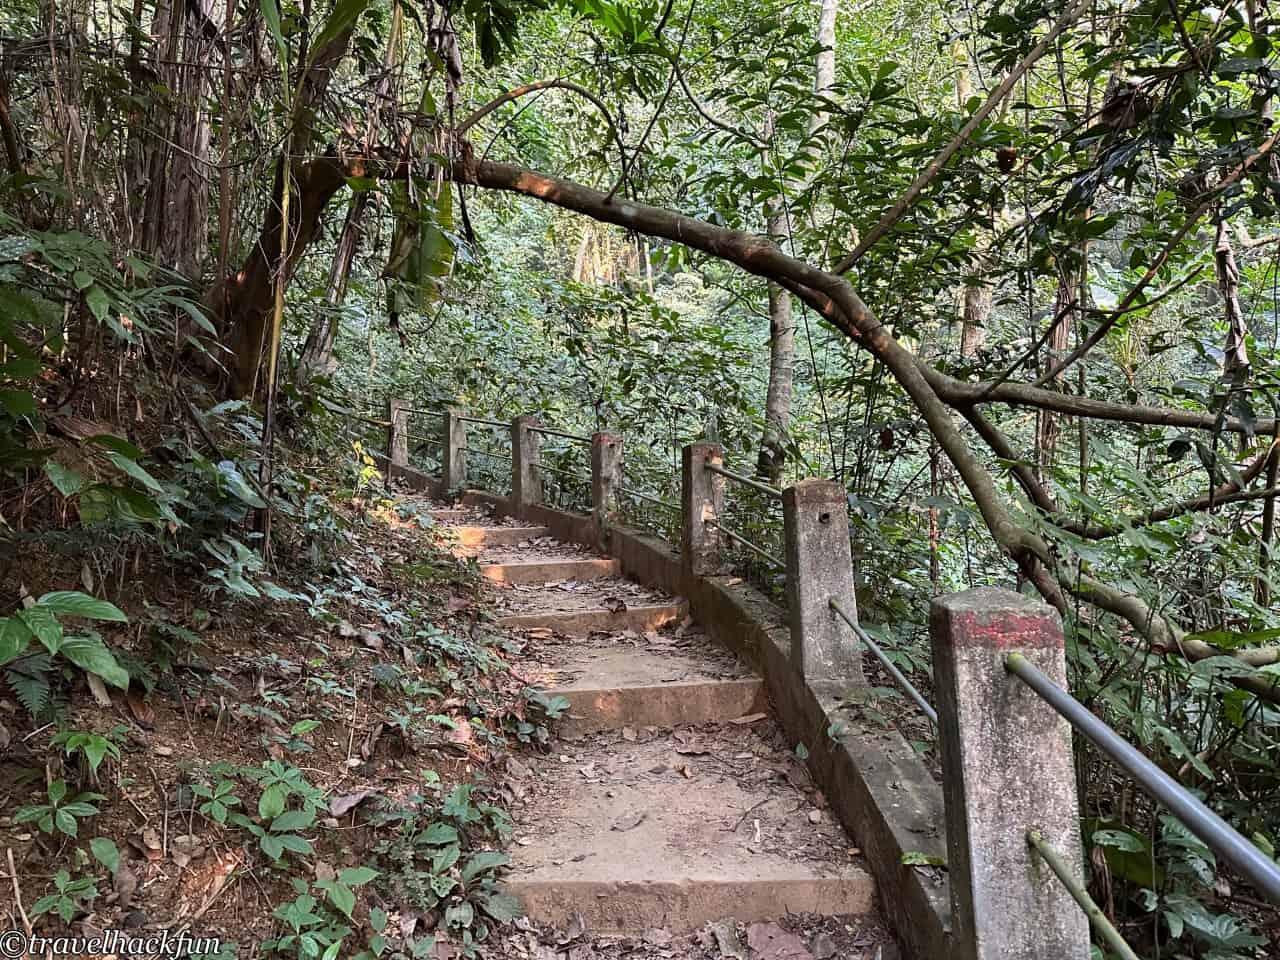 Cuc Phoung Național Park,菊芳國家公園 25